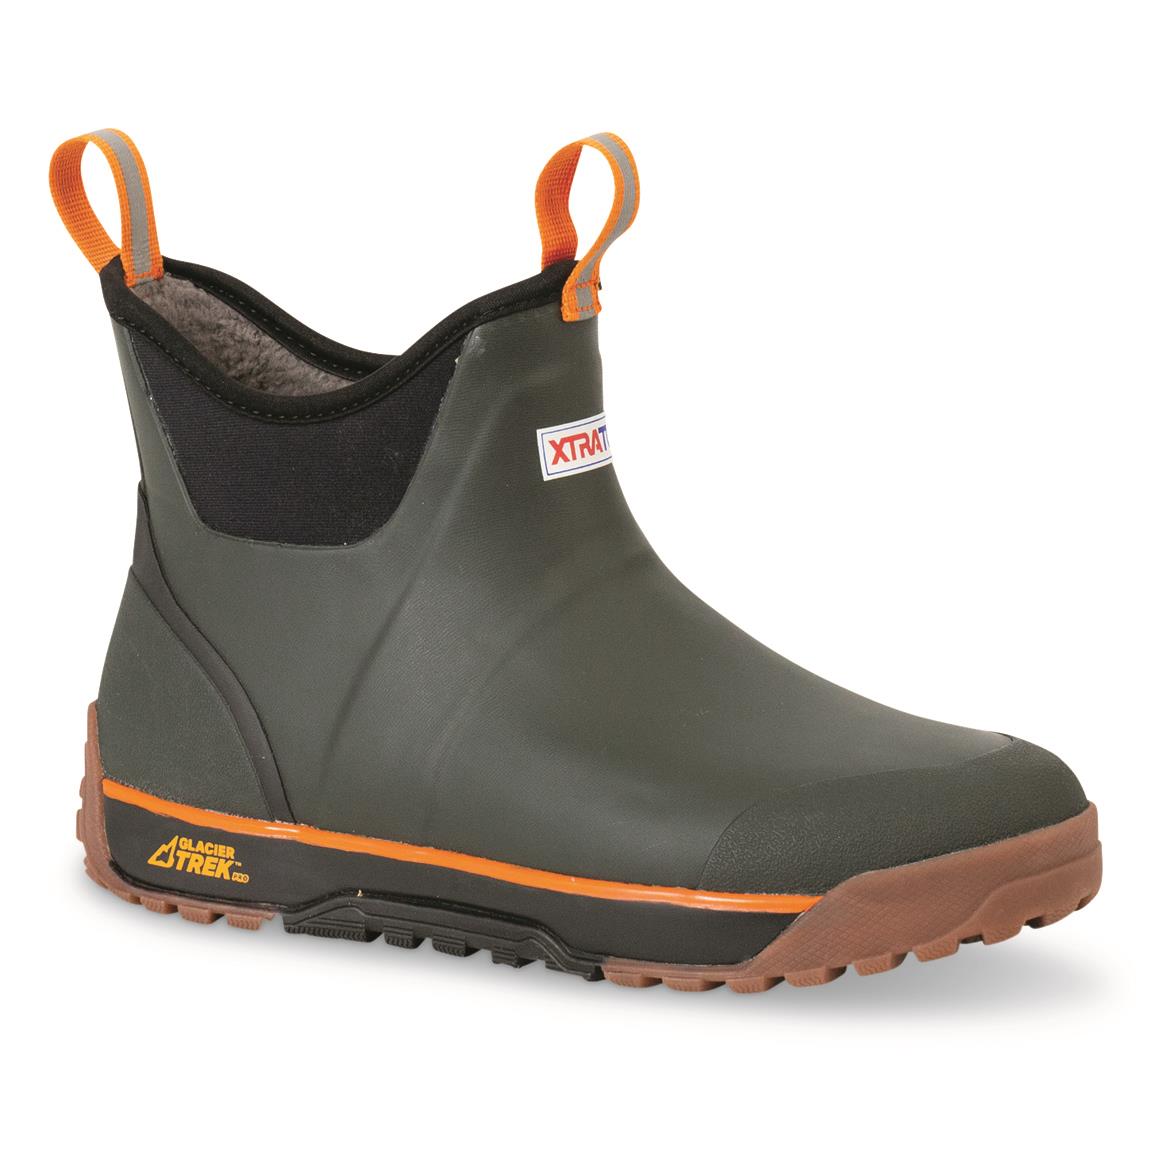 XTRATUF Men's Ice Rubber Waterproof Ankle Deck Boots, Olive